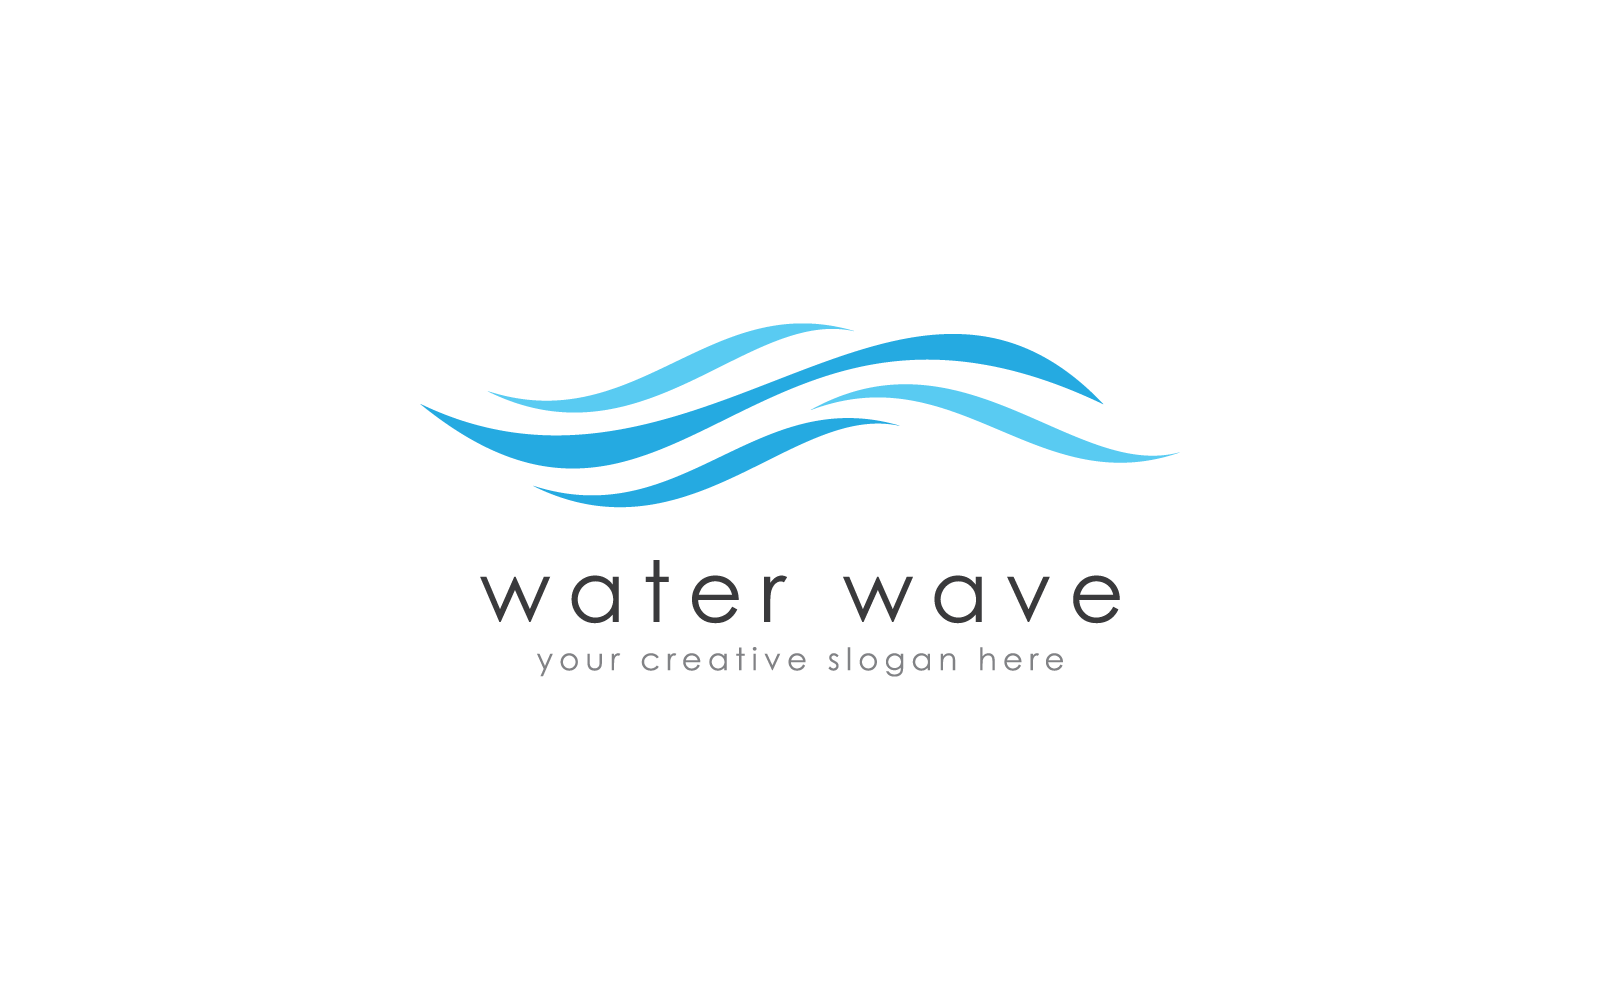 Water Wave logo icon vector illustration flat design